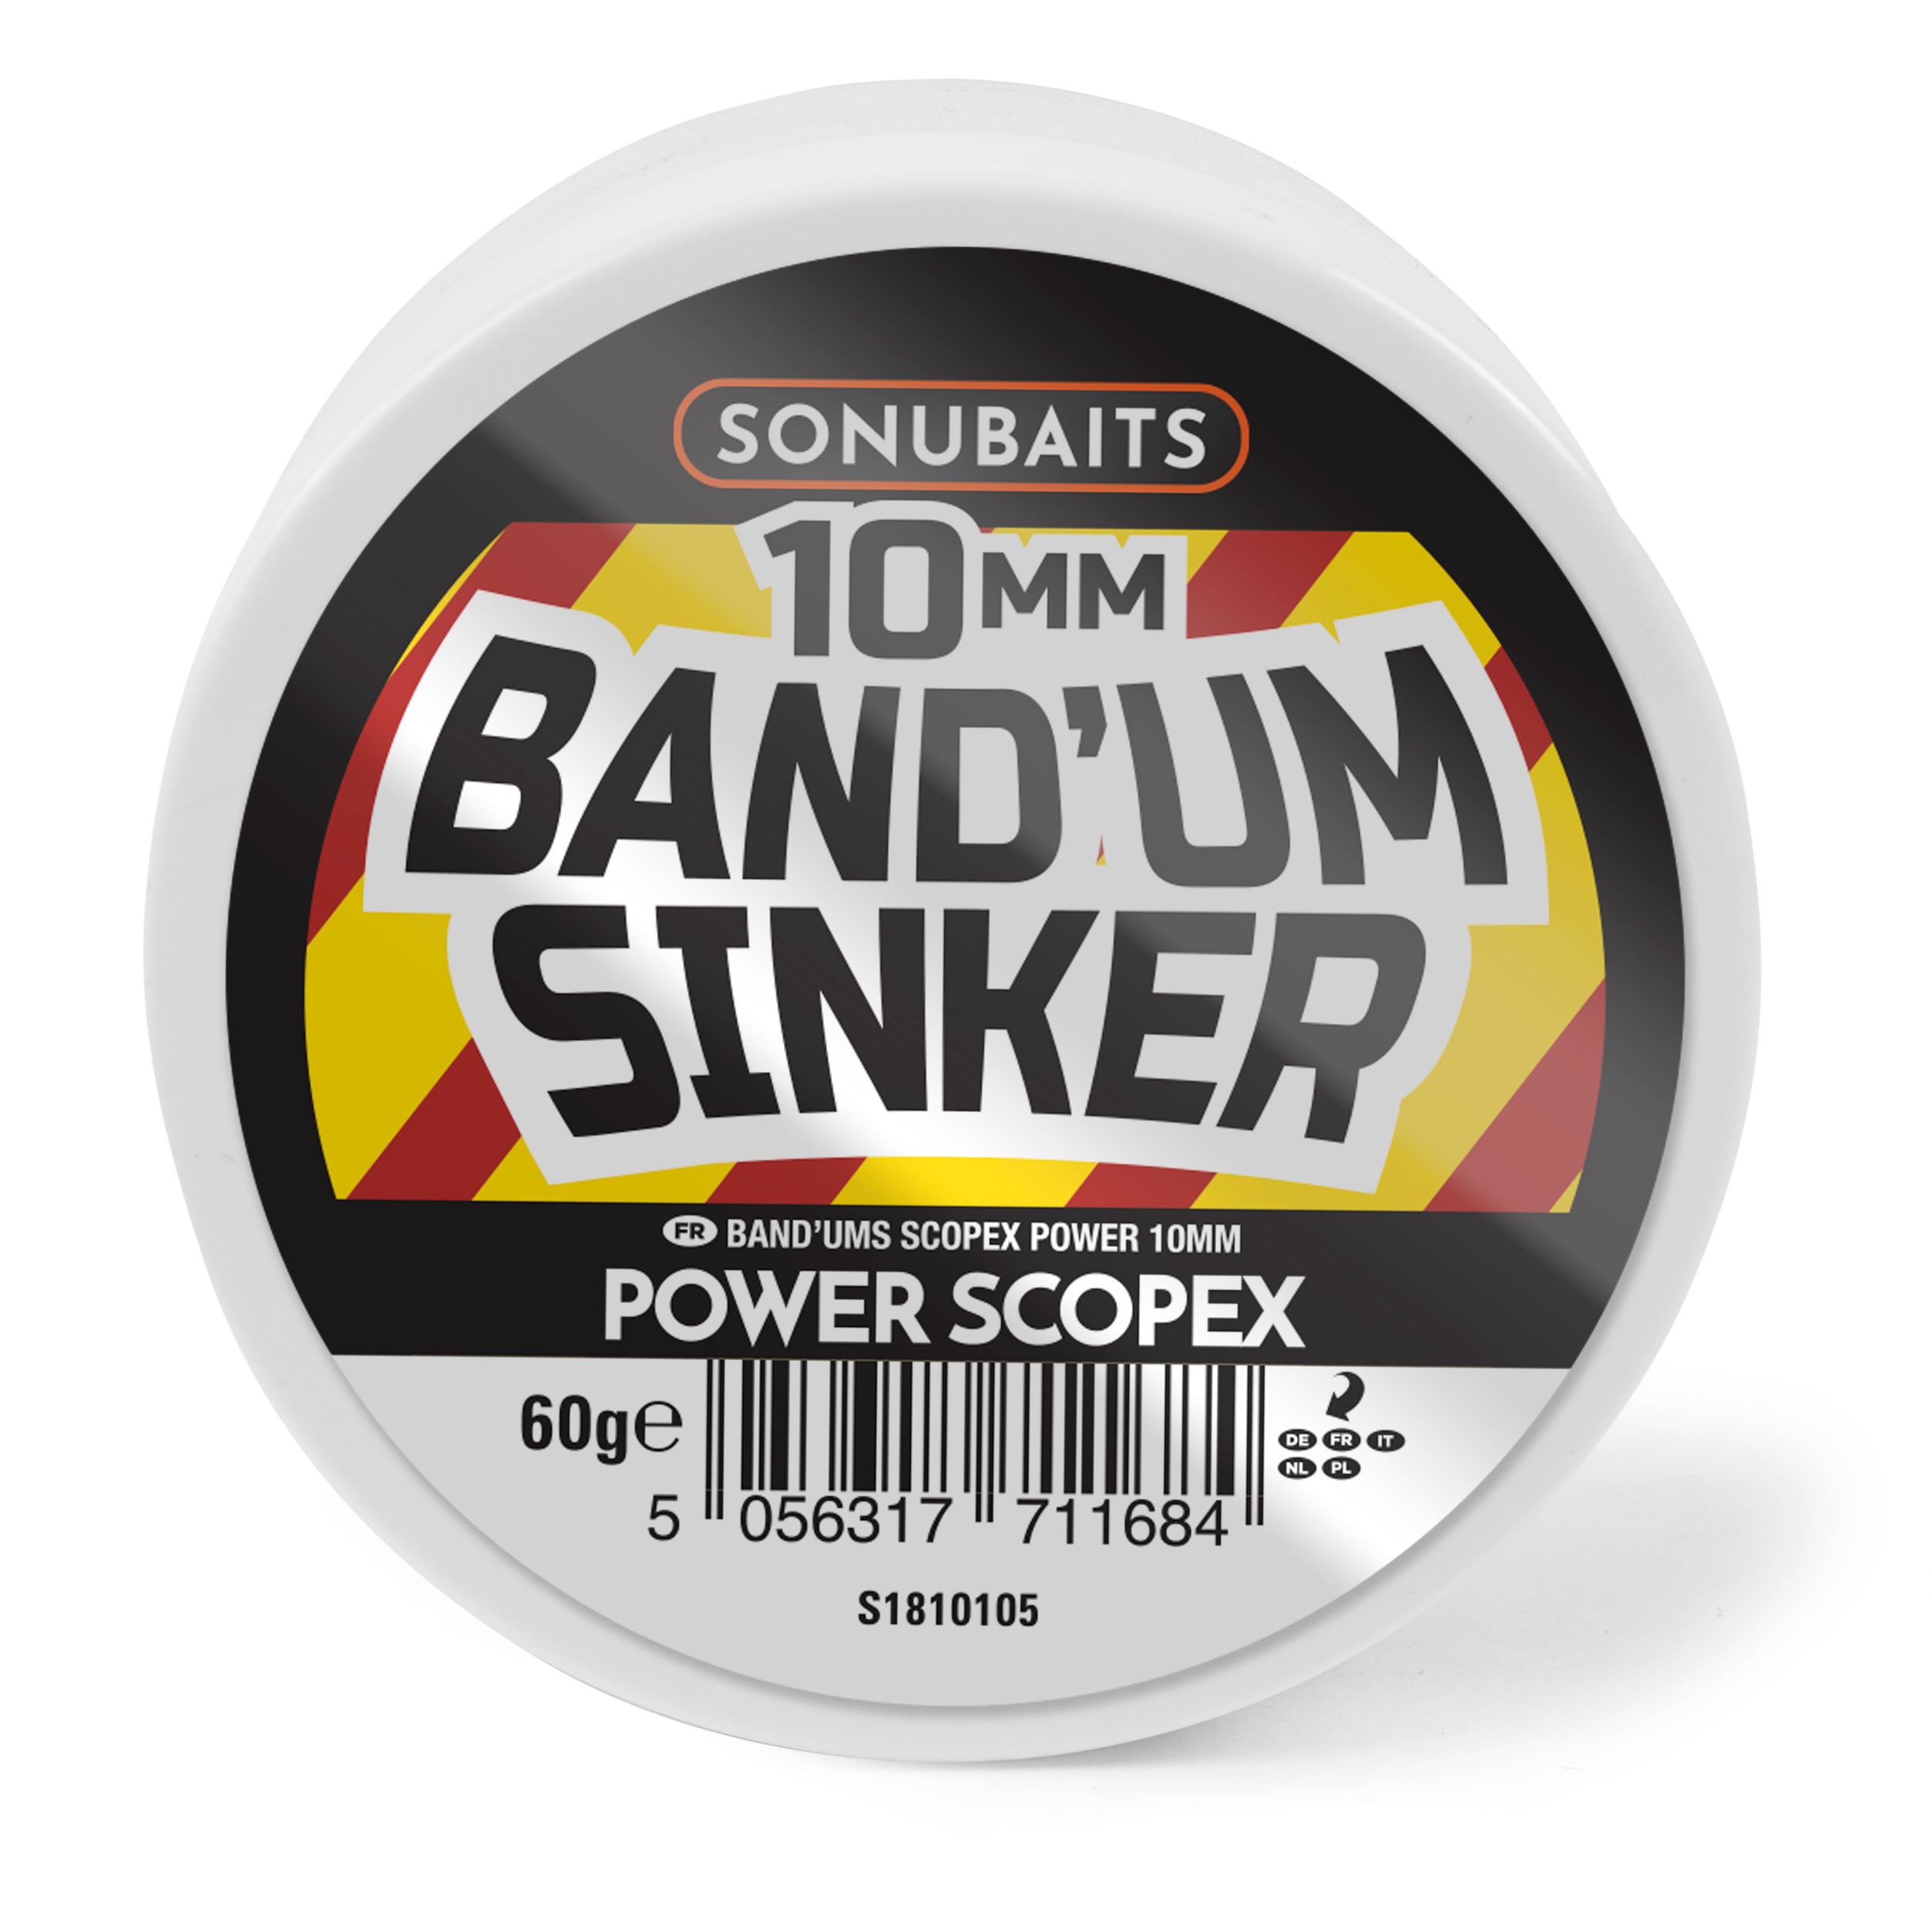 Sonubaits Band'um Sinker Witvis Boilies Power Scopex 10mm